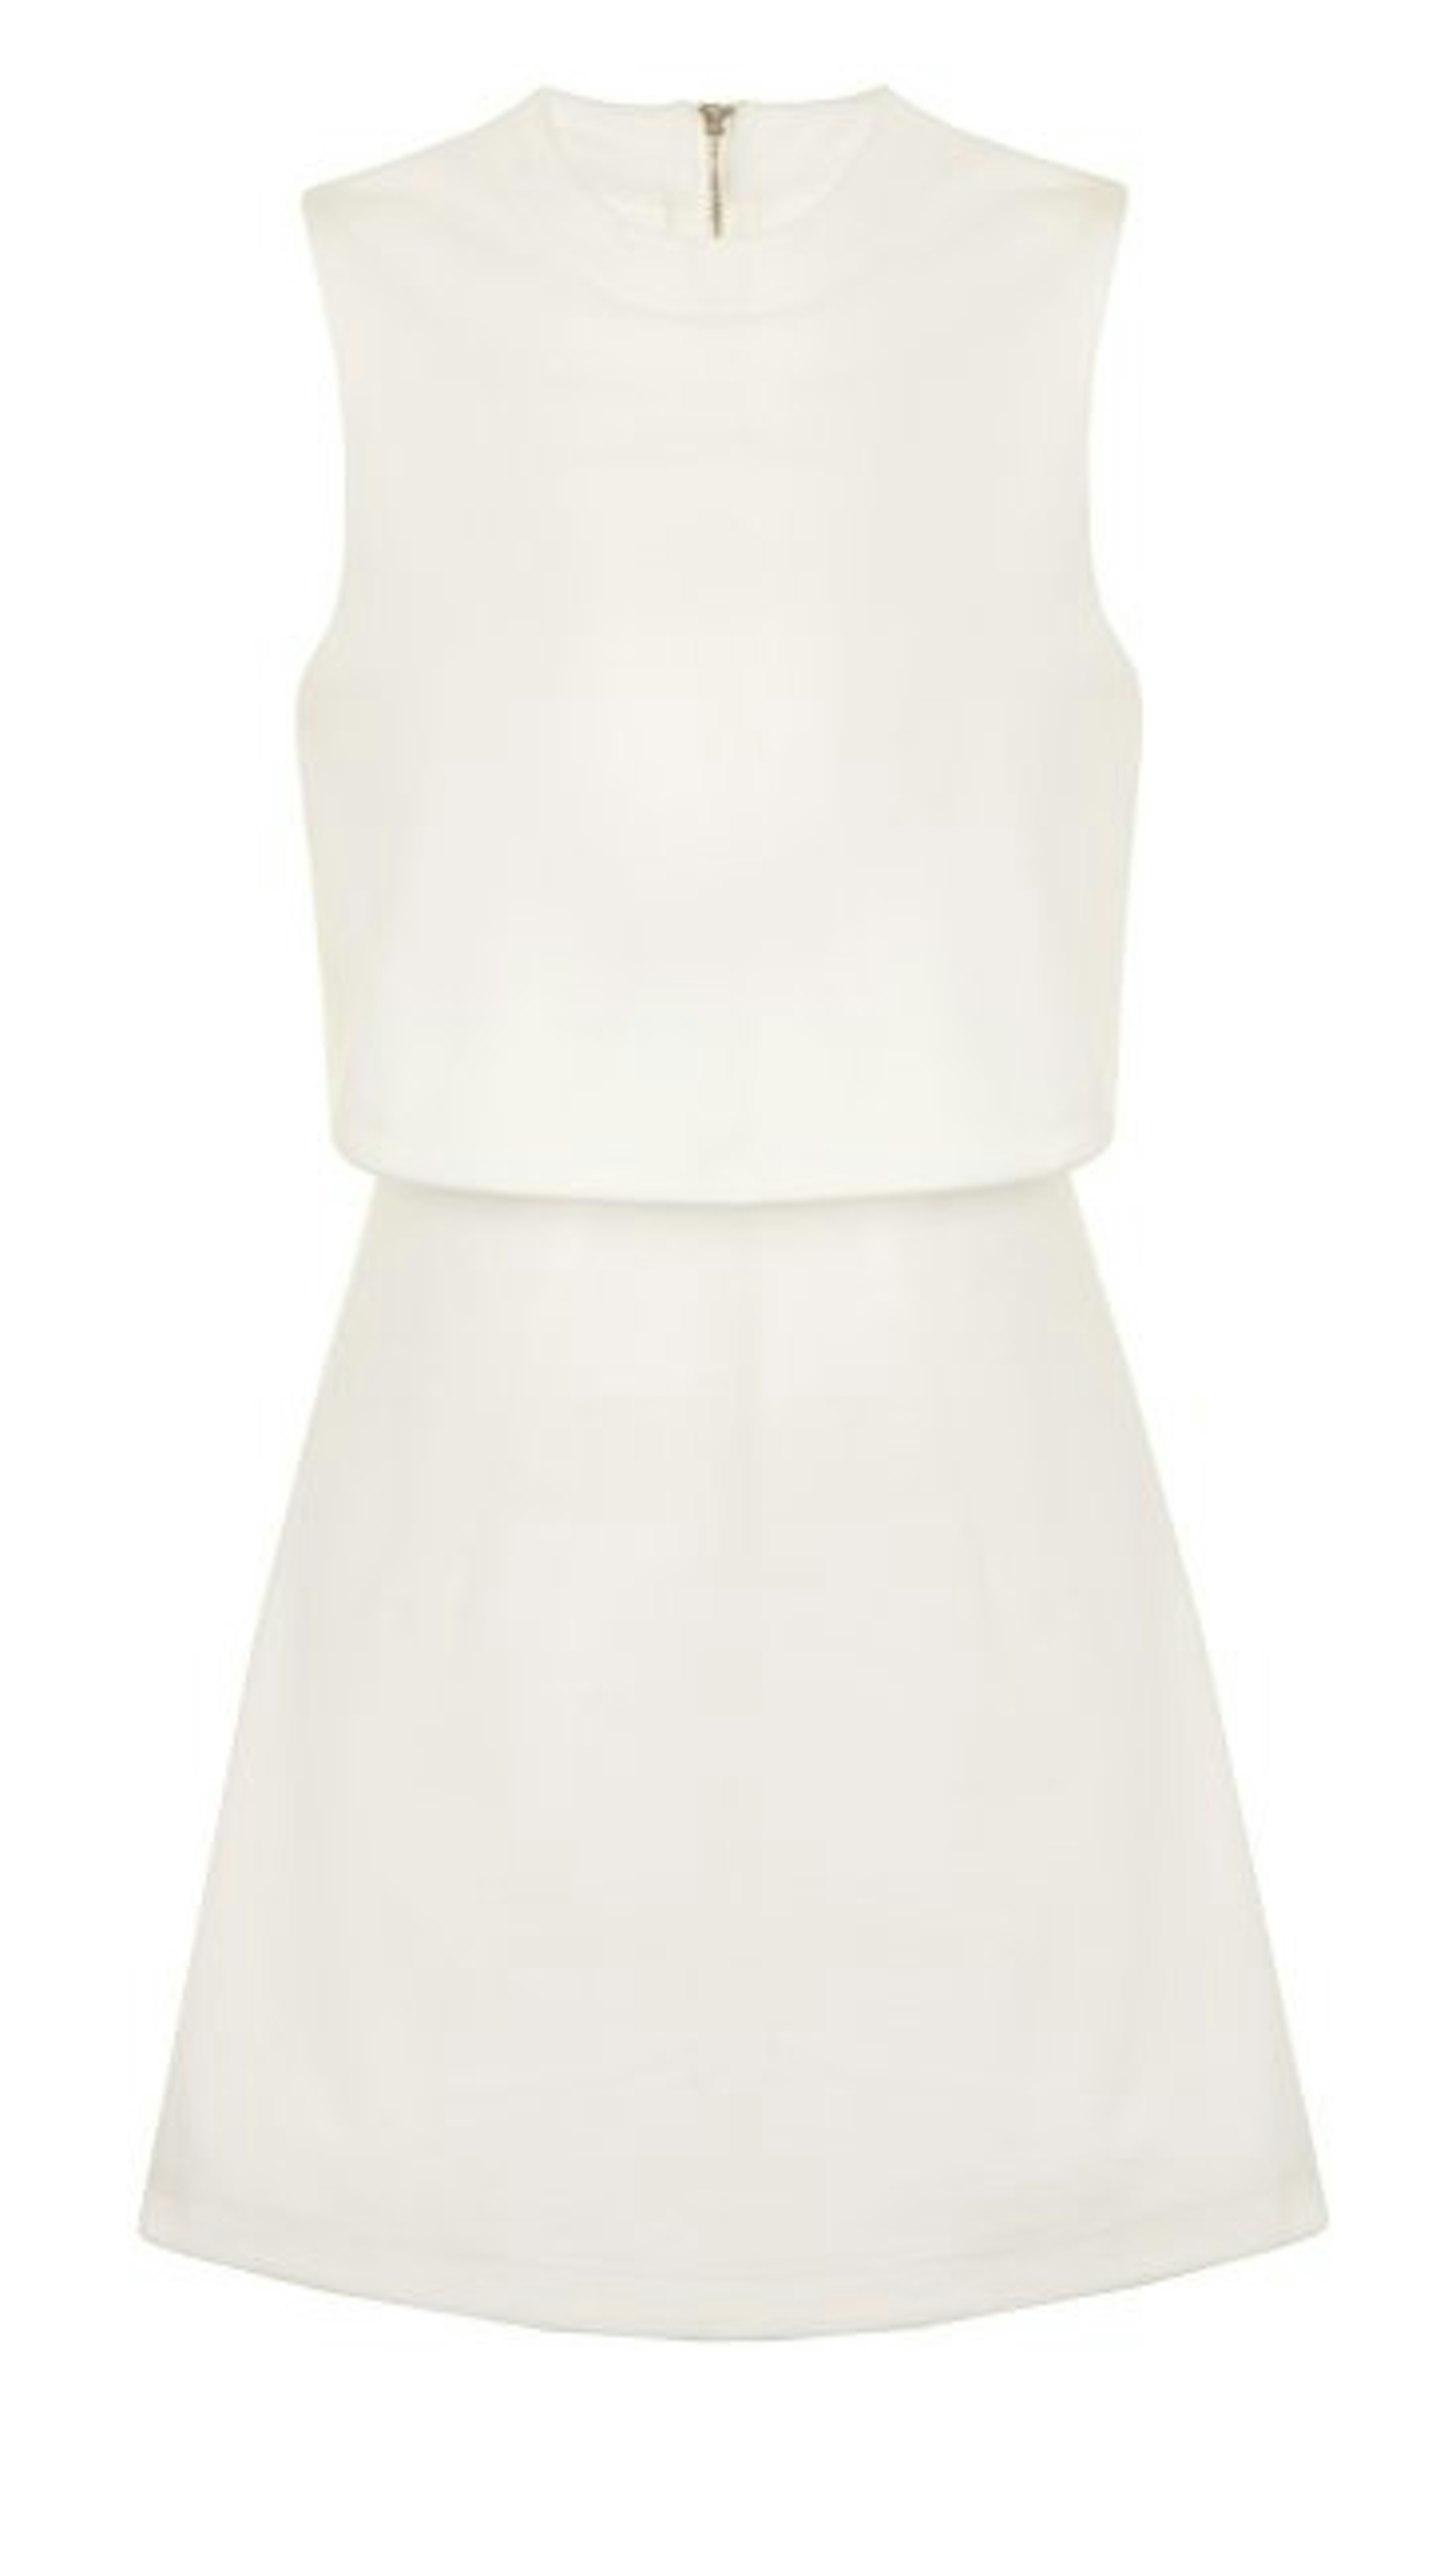 Lavish Alice White Dress £45edit